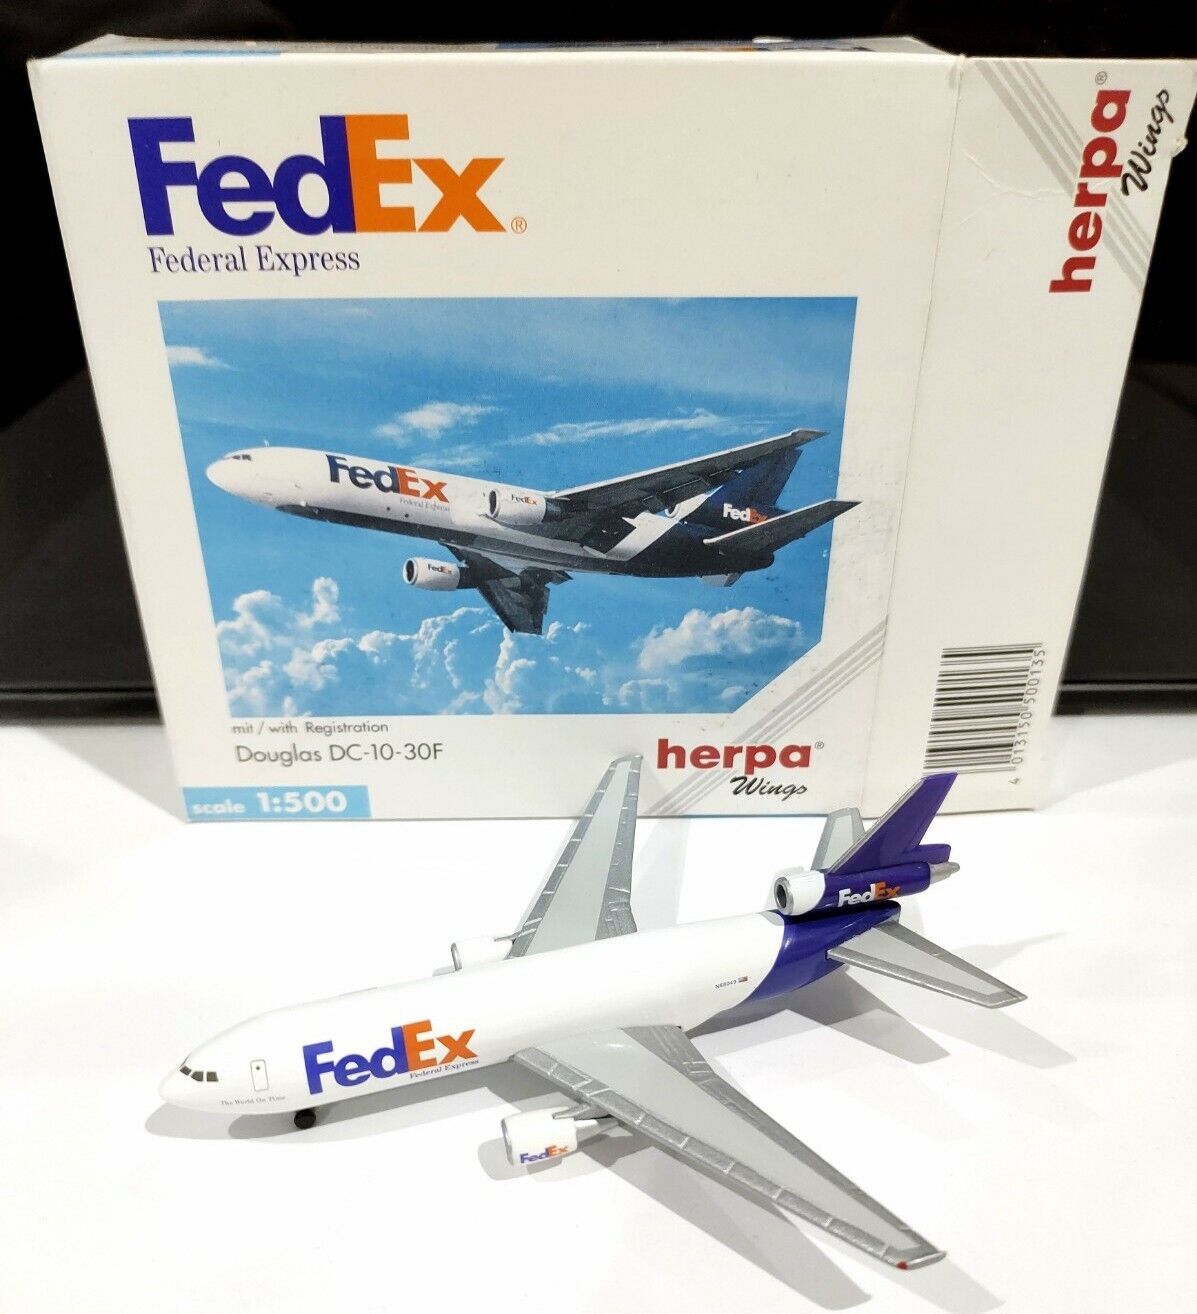 Herpa 500135 FedEx Express Douglas DC-10-30 F 1:500 scale N68049 model air plane